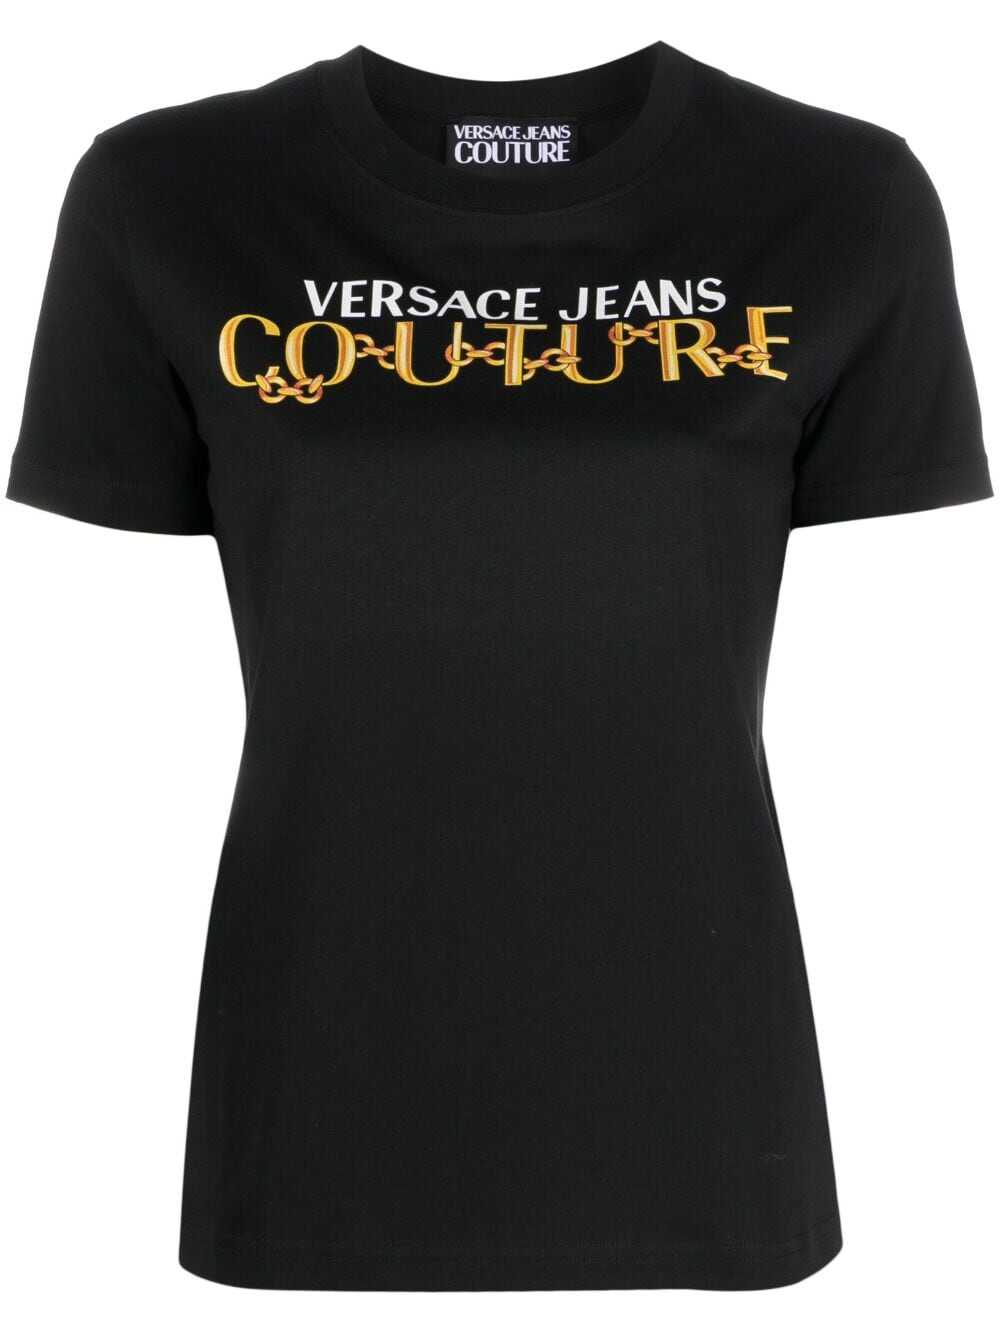 Versace Jeans Couture Versace Jeans Couture T-shirts And Polos Black Black